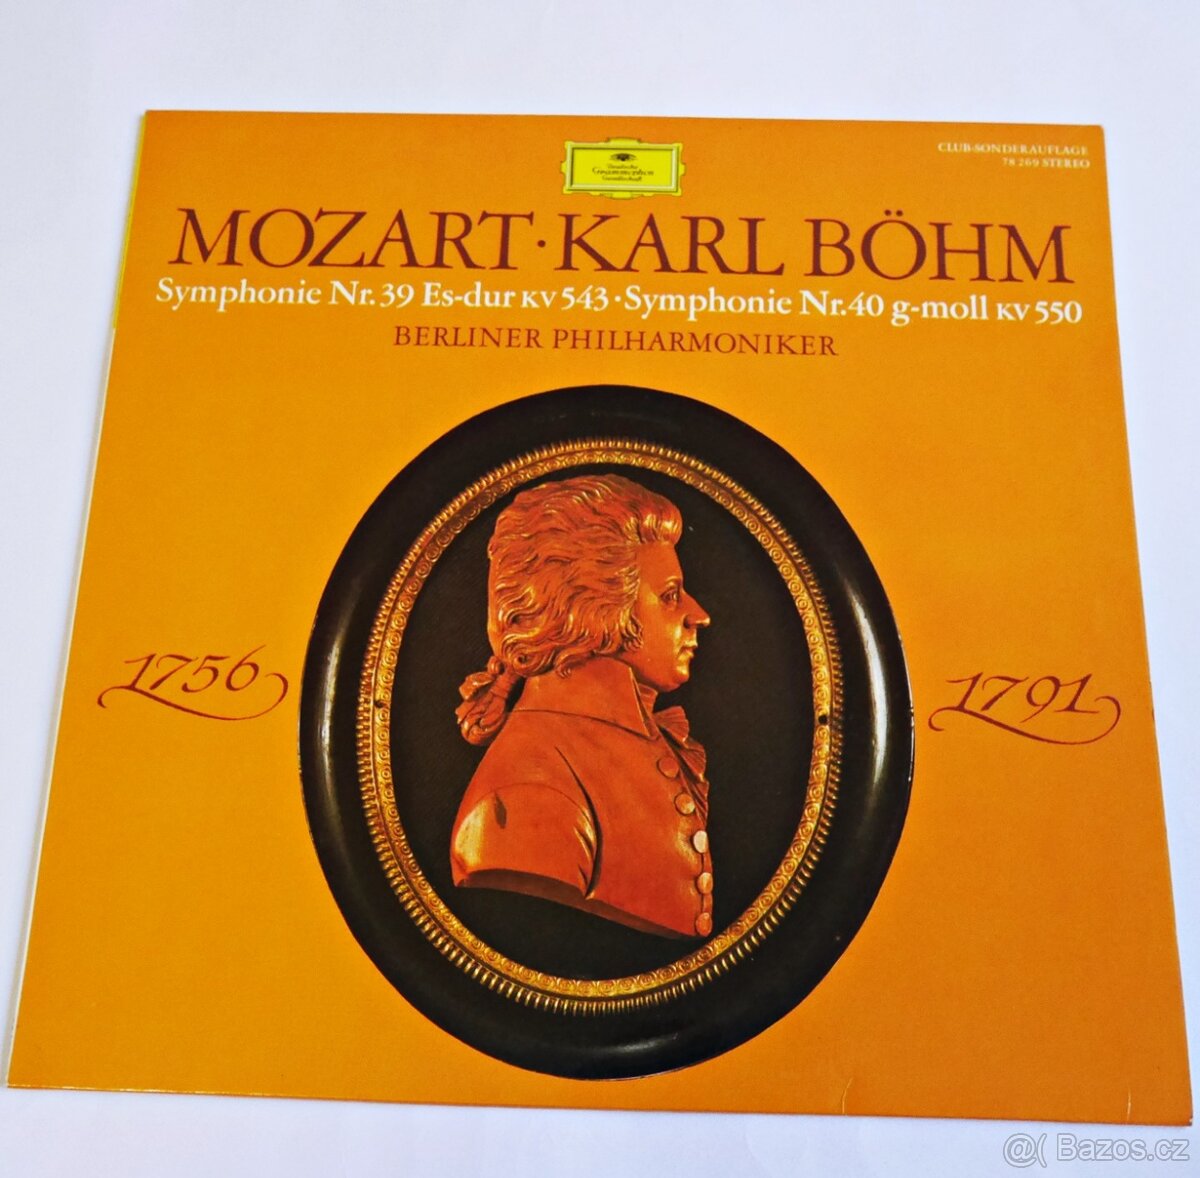 Mozart - Karl Böhm - Berliner Philharmoniker (LP, Club)